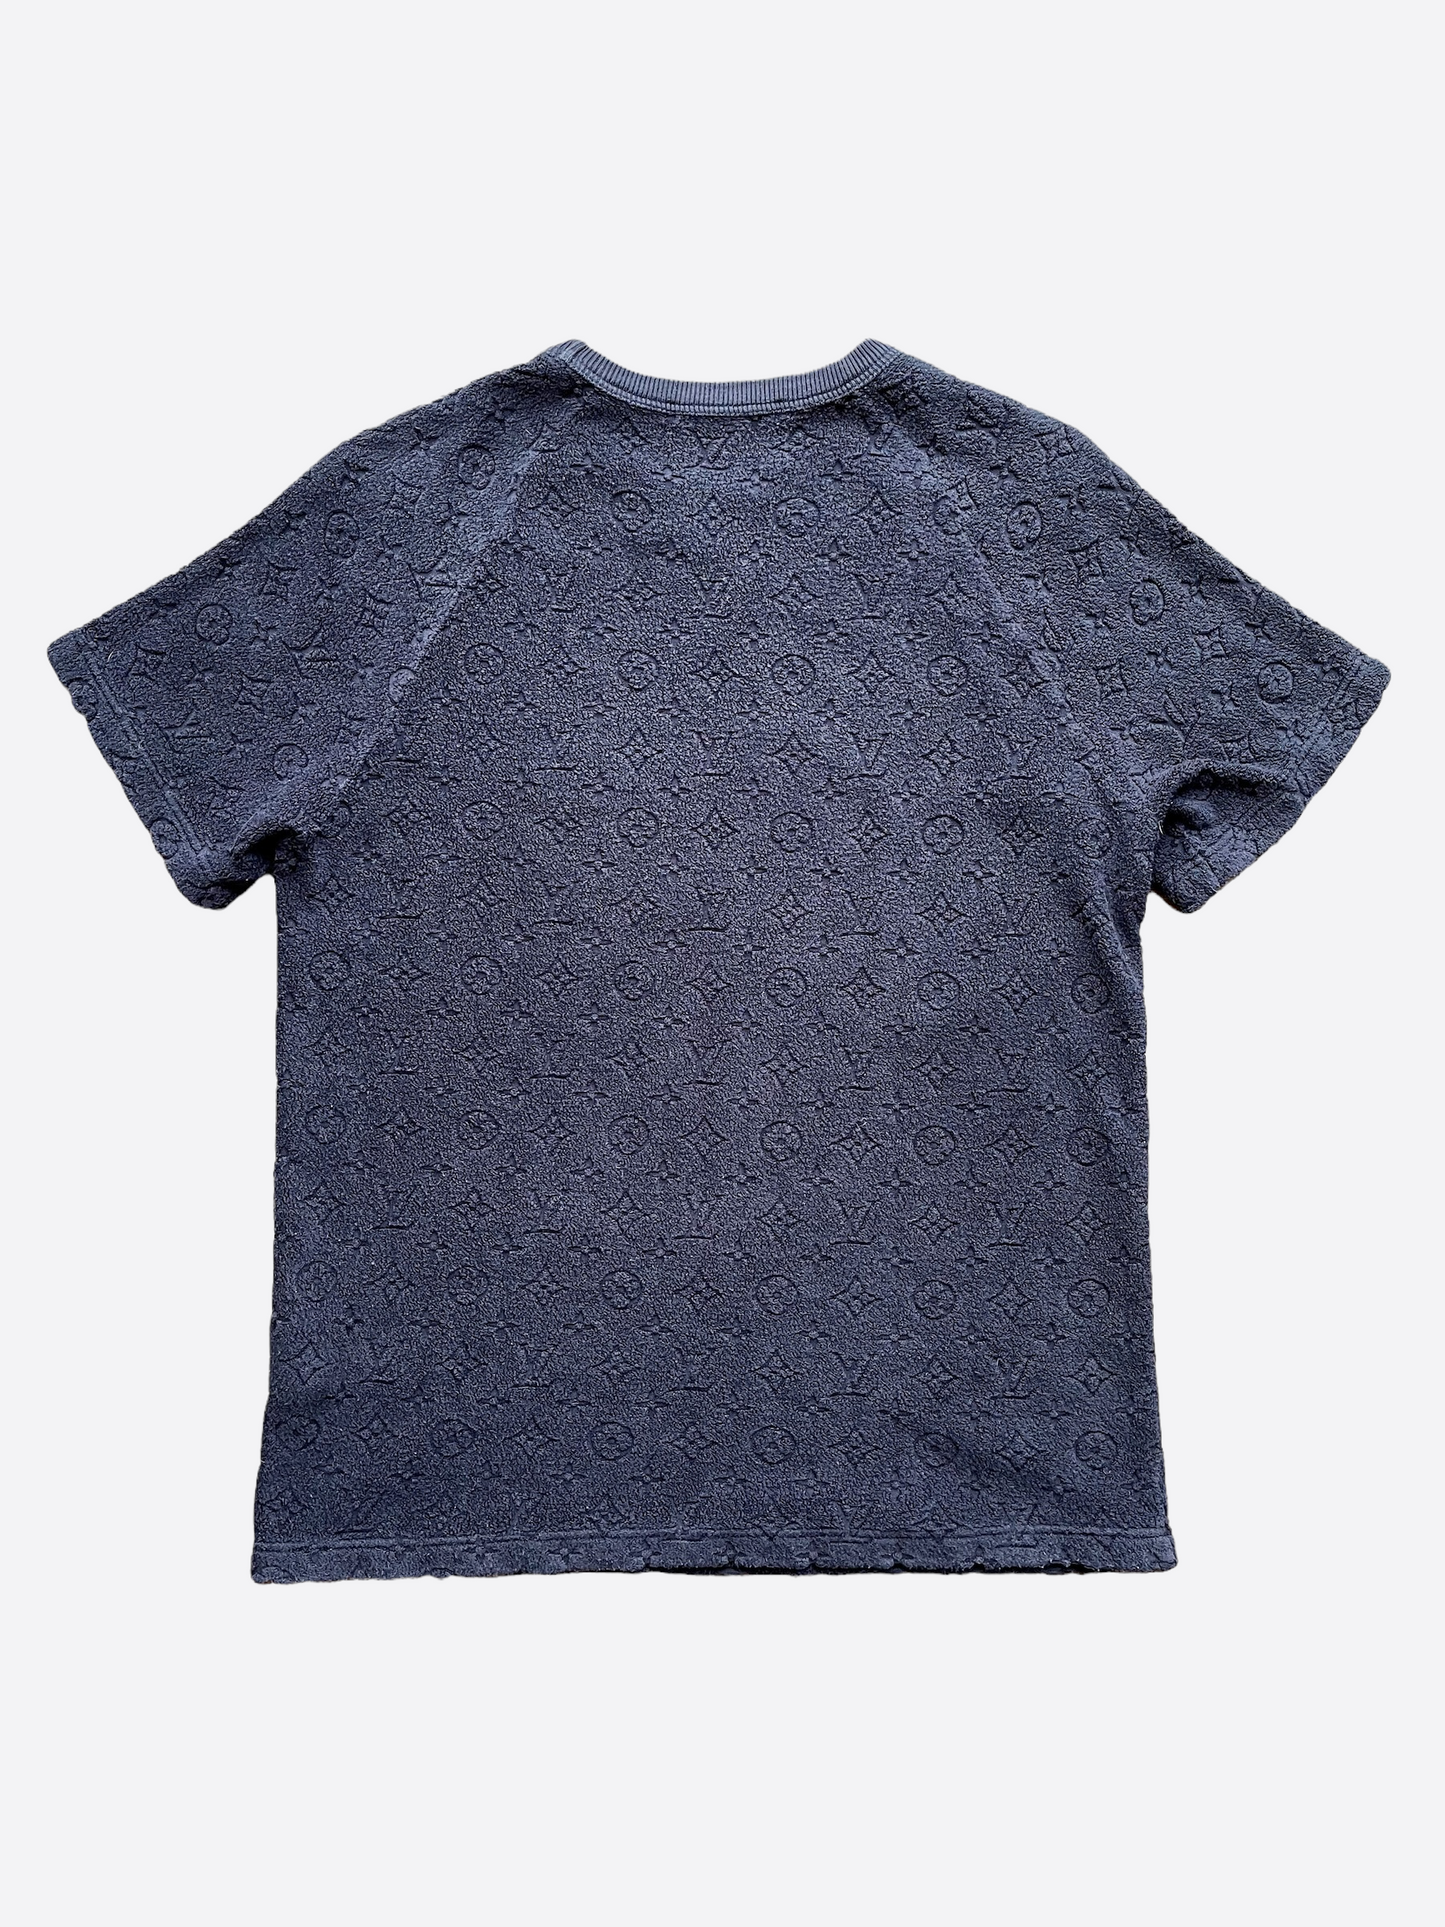 Louis Vuitton Monogram Navy Towel Fabric T-Shirt S